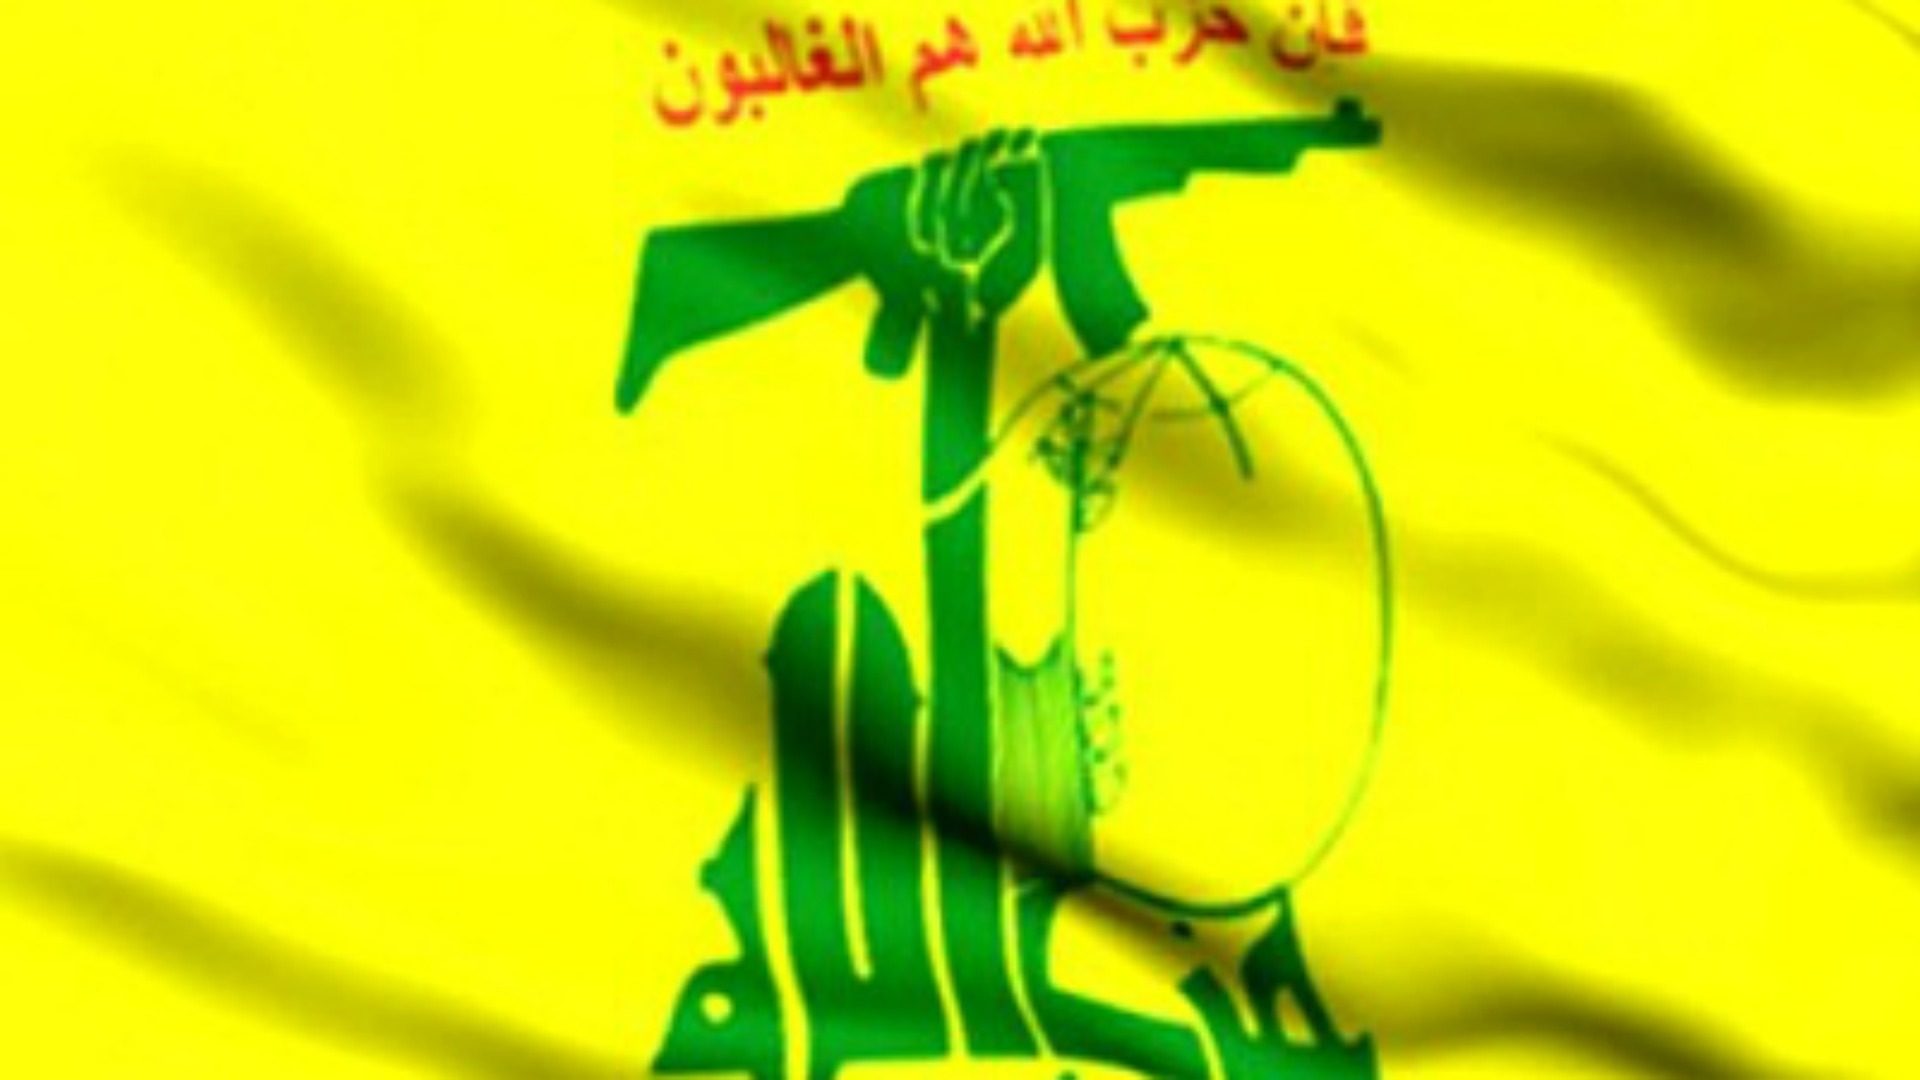 Fanion du Hezbollah  (Photo:  www.almanar.com.lb)